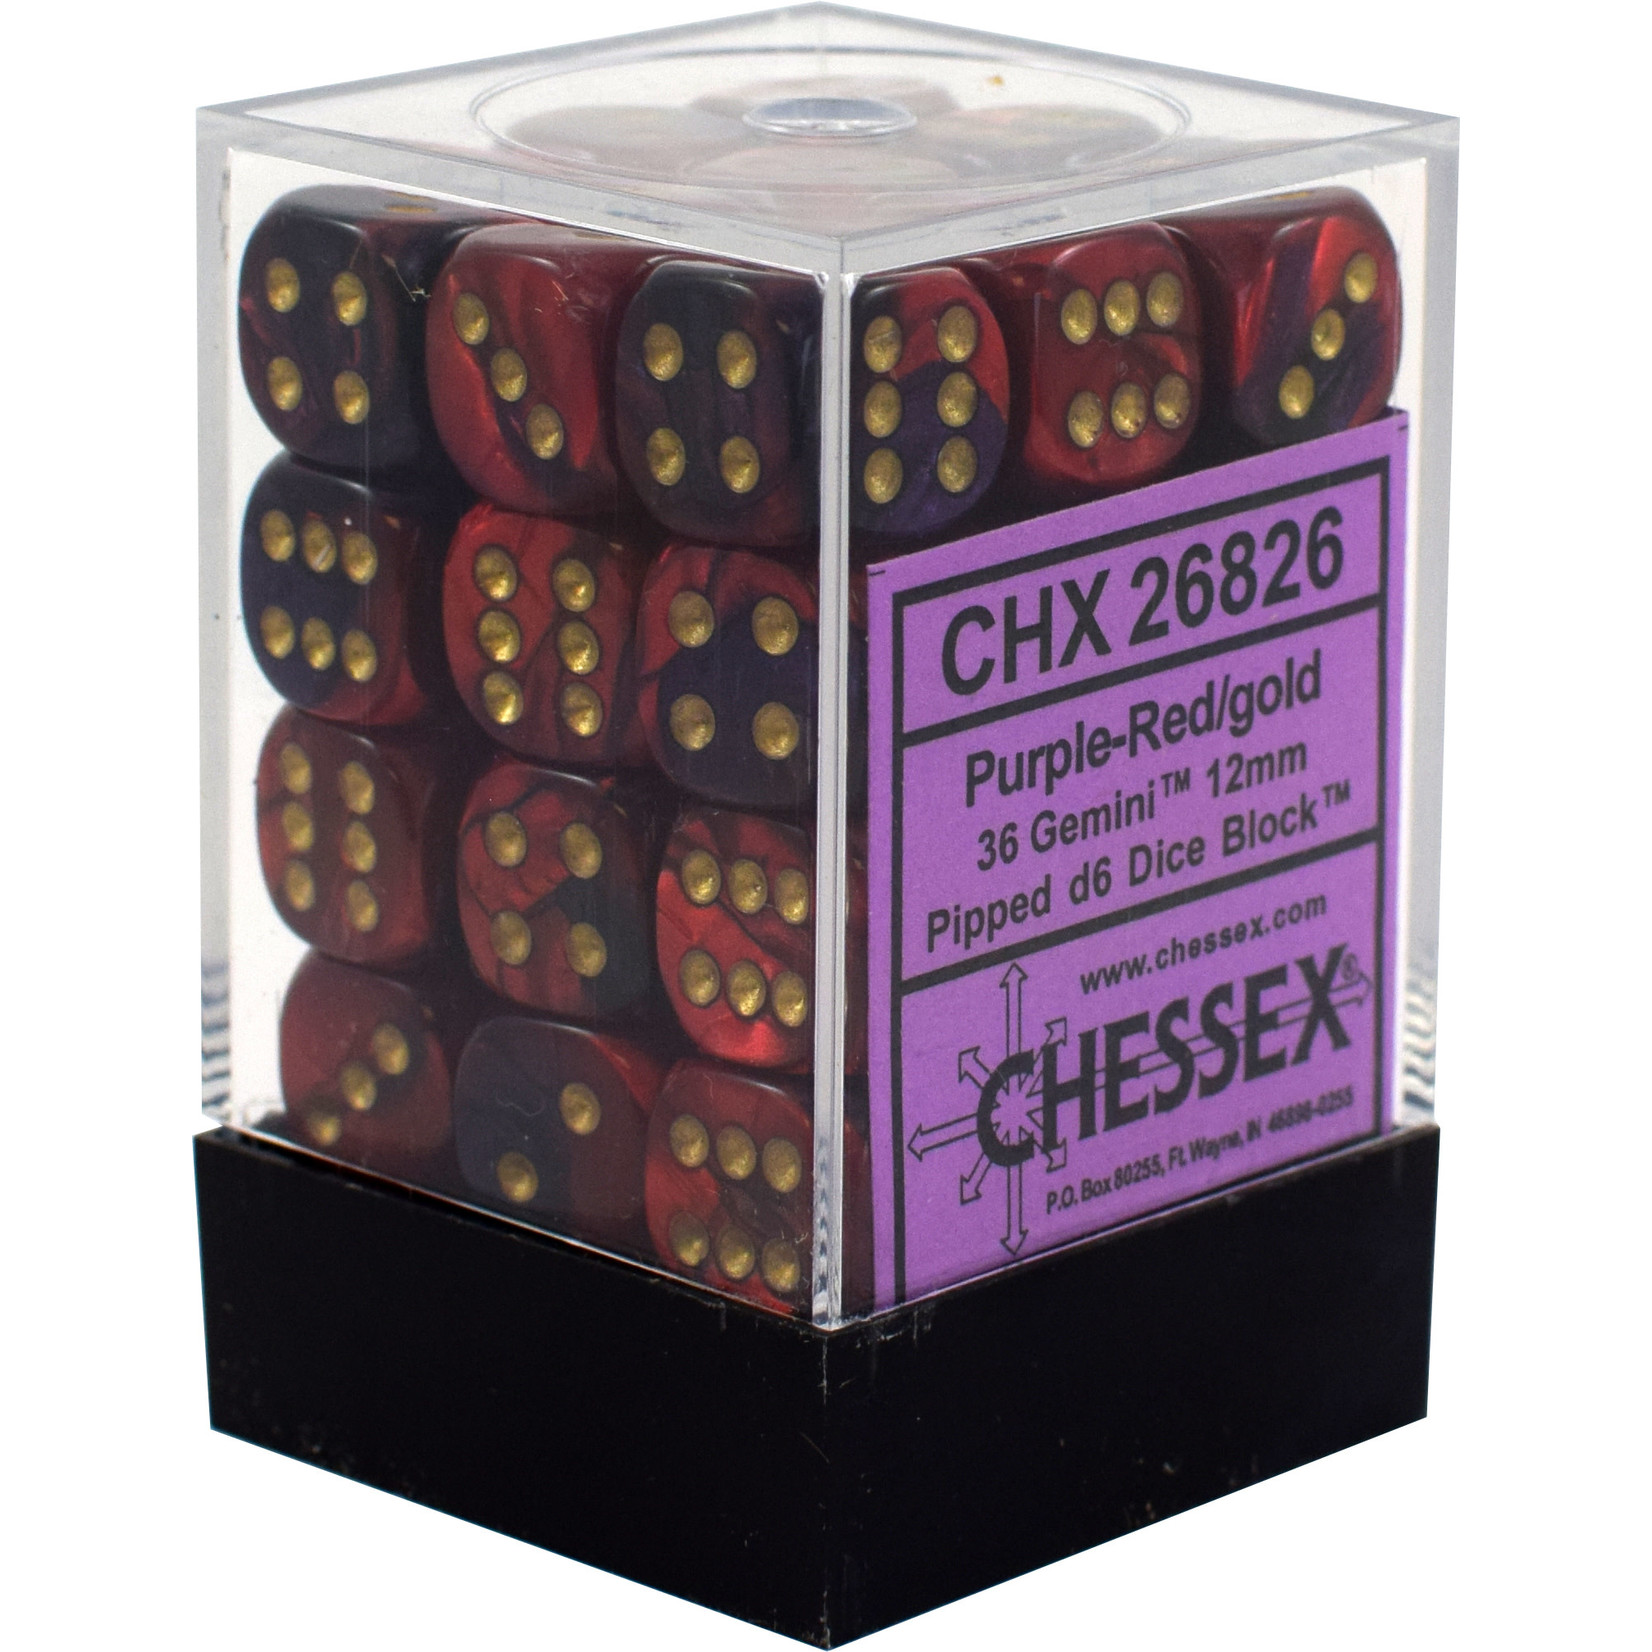 Chessex Gemini: 12mm D6 Purple Red/Gold (36)